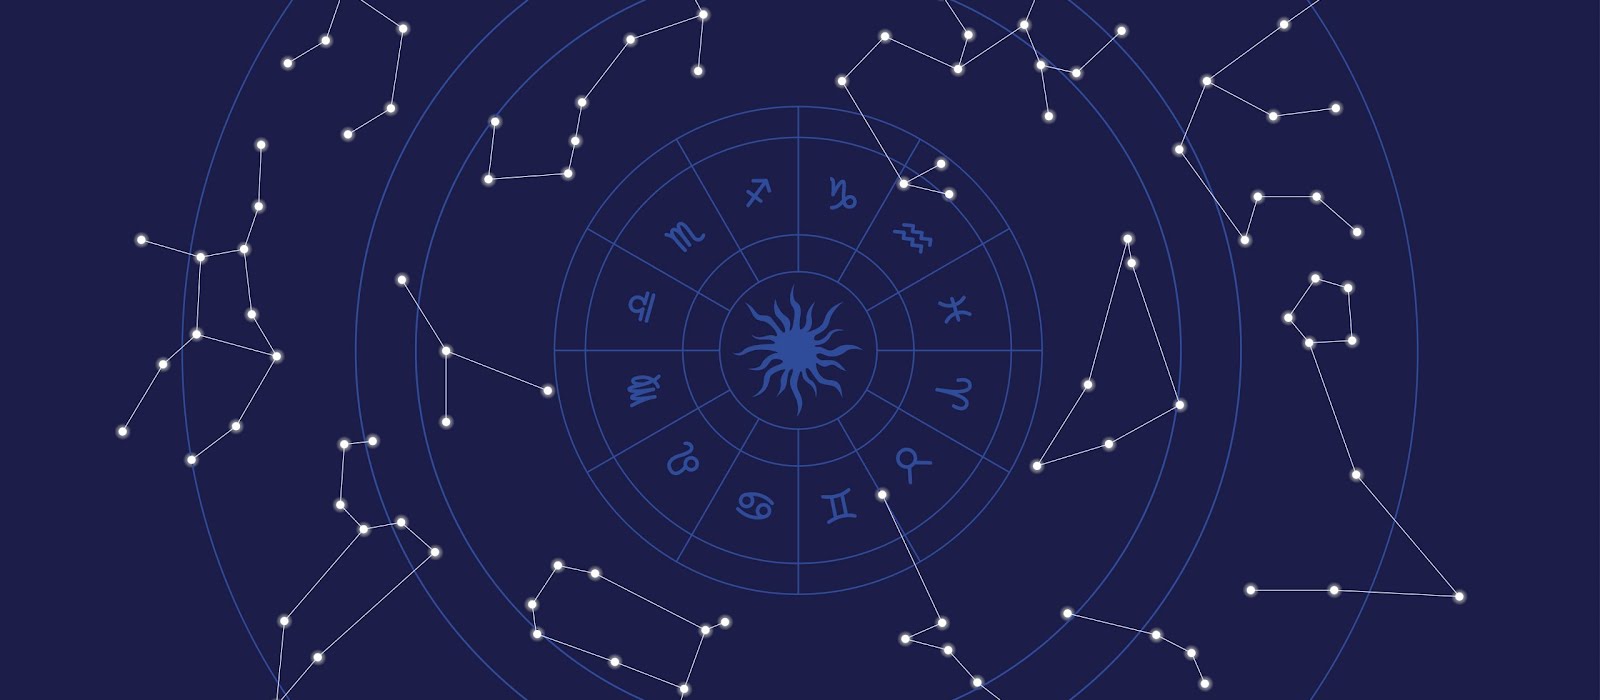 It’s Sagittarius season – a month of abundance, optimism and adventure lies ahead